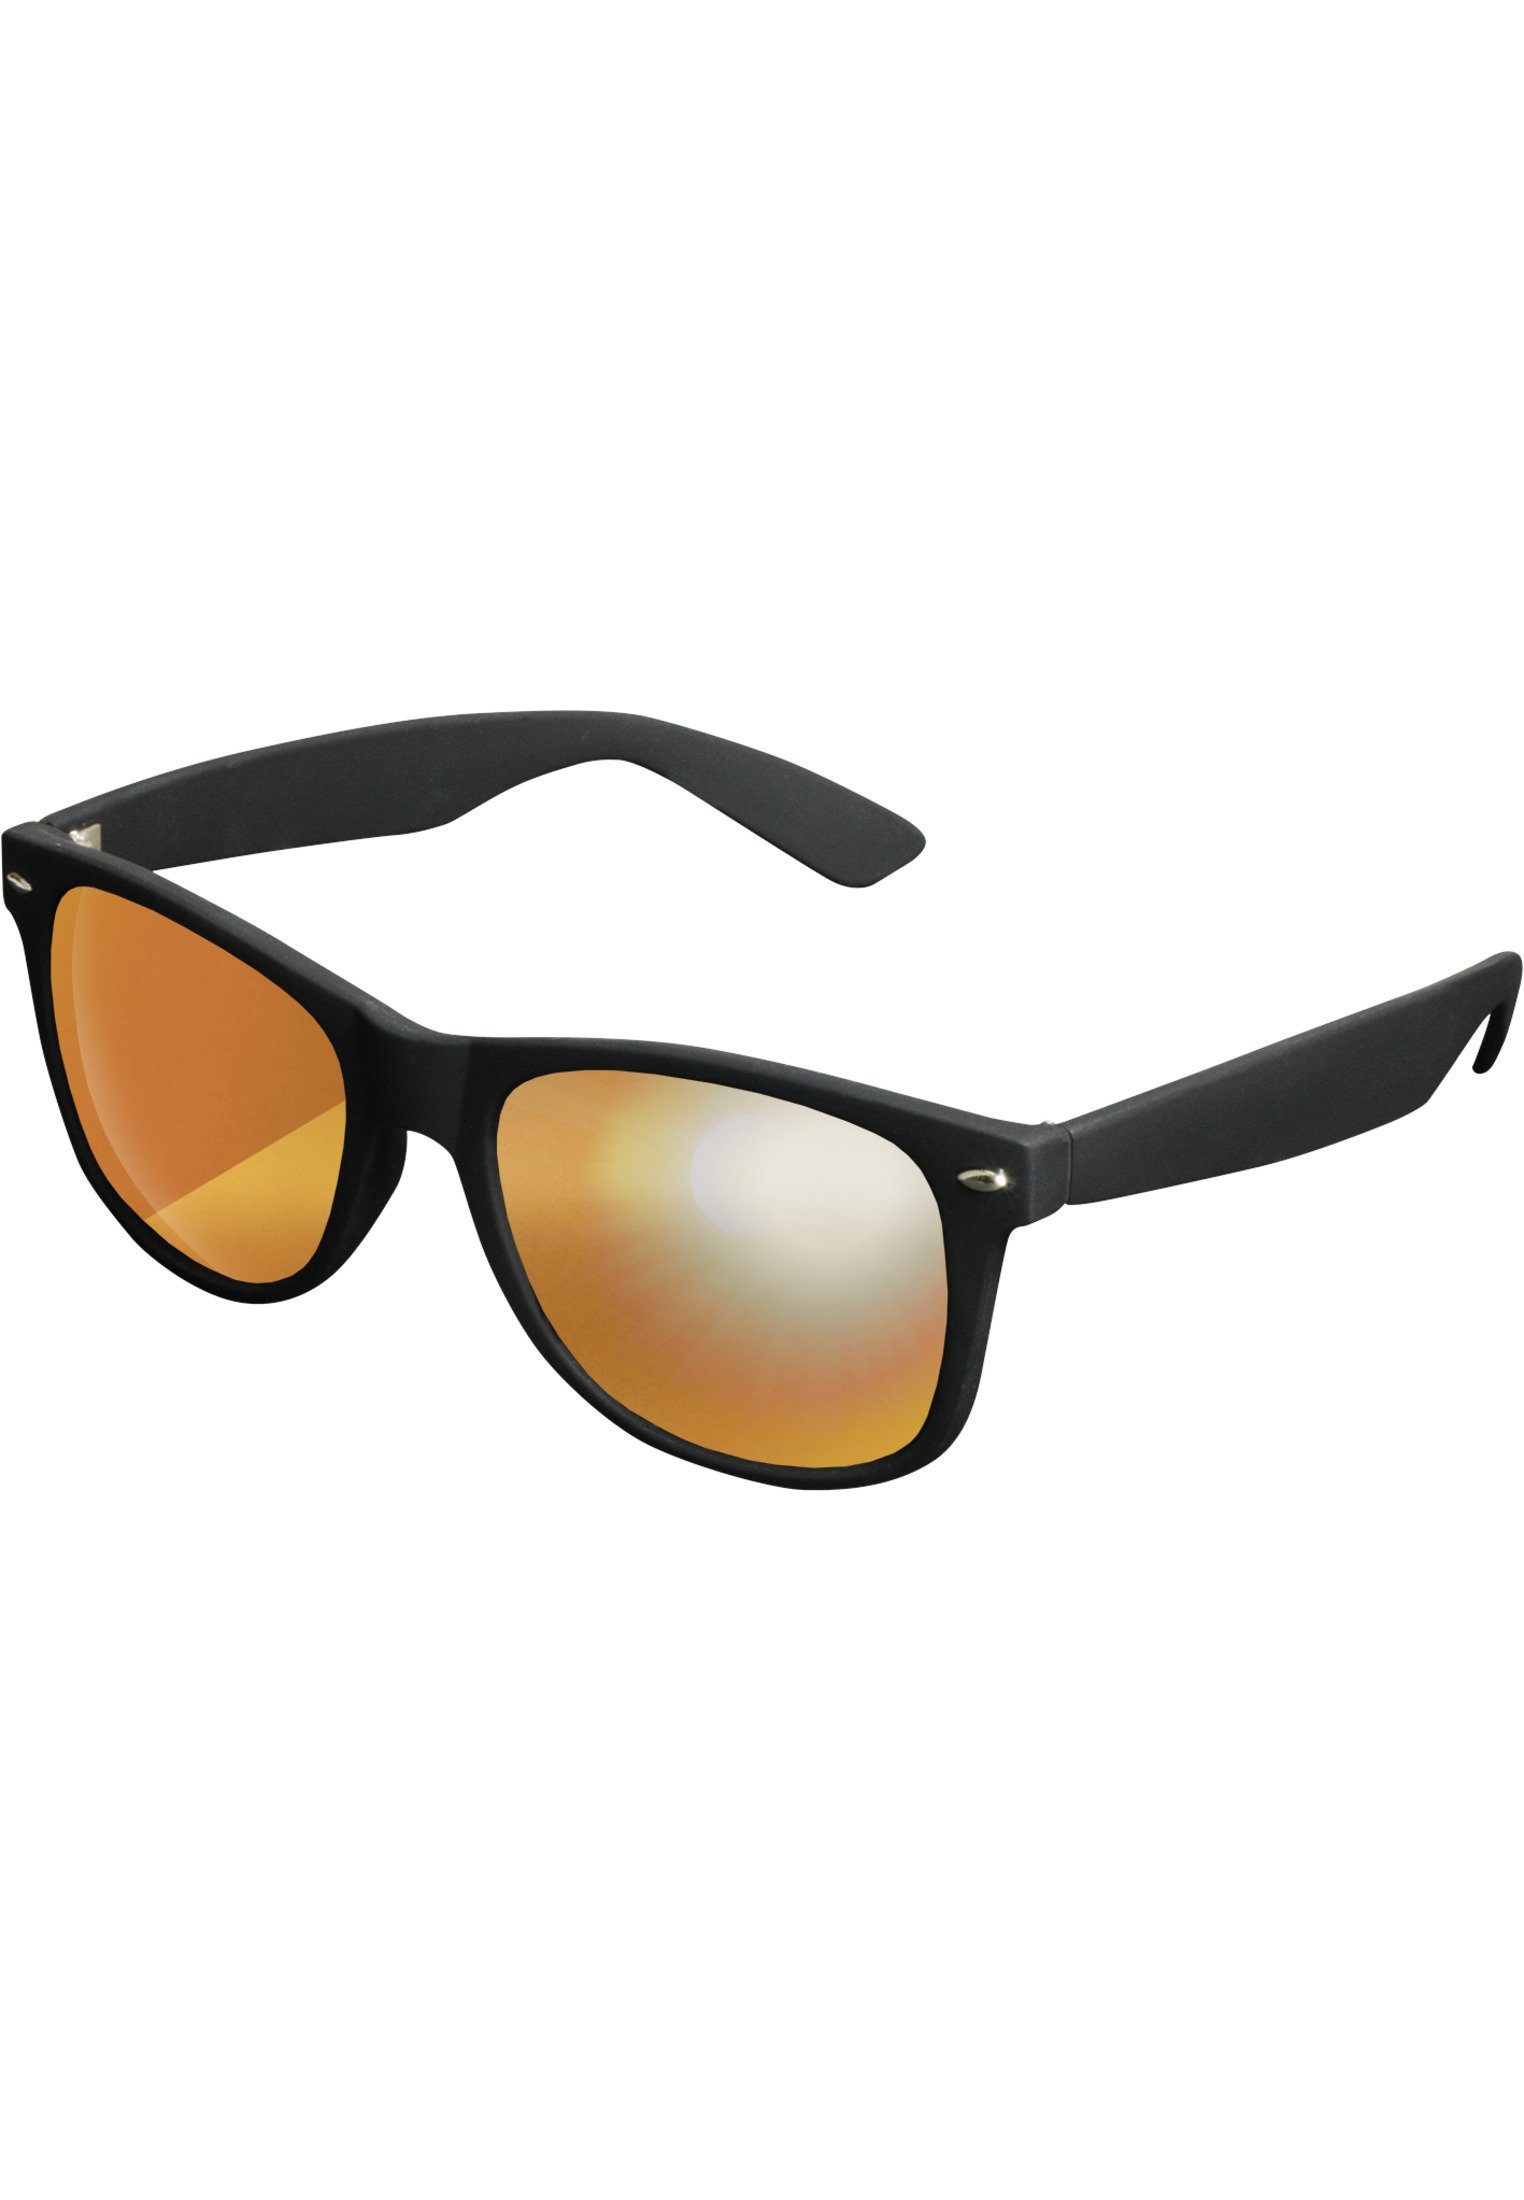 Sonnenbrille blk/orange MSTRDS Likoma Accessoires Mirror Sunglasses